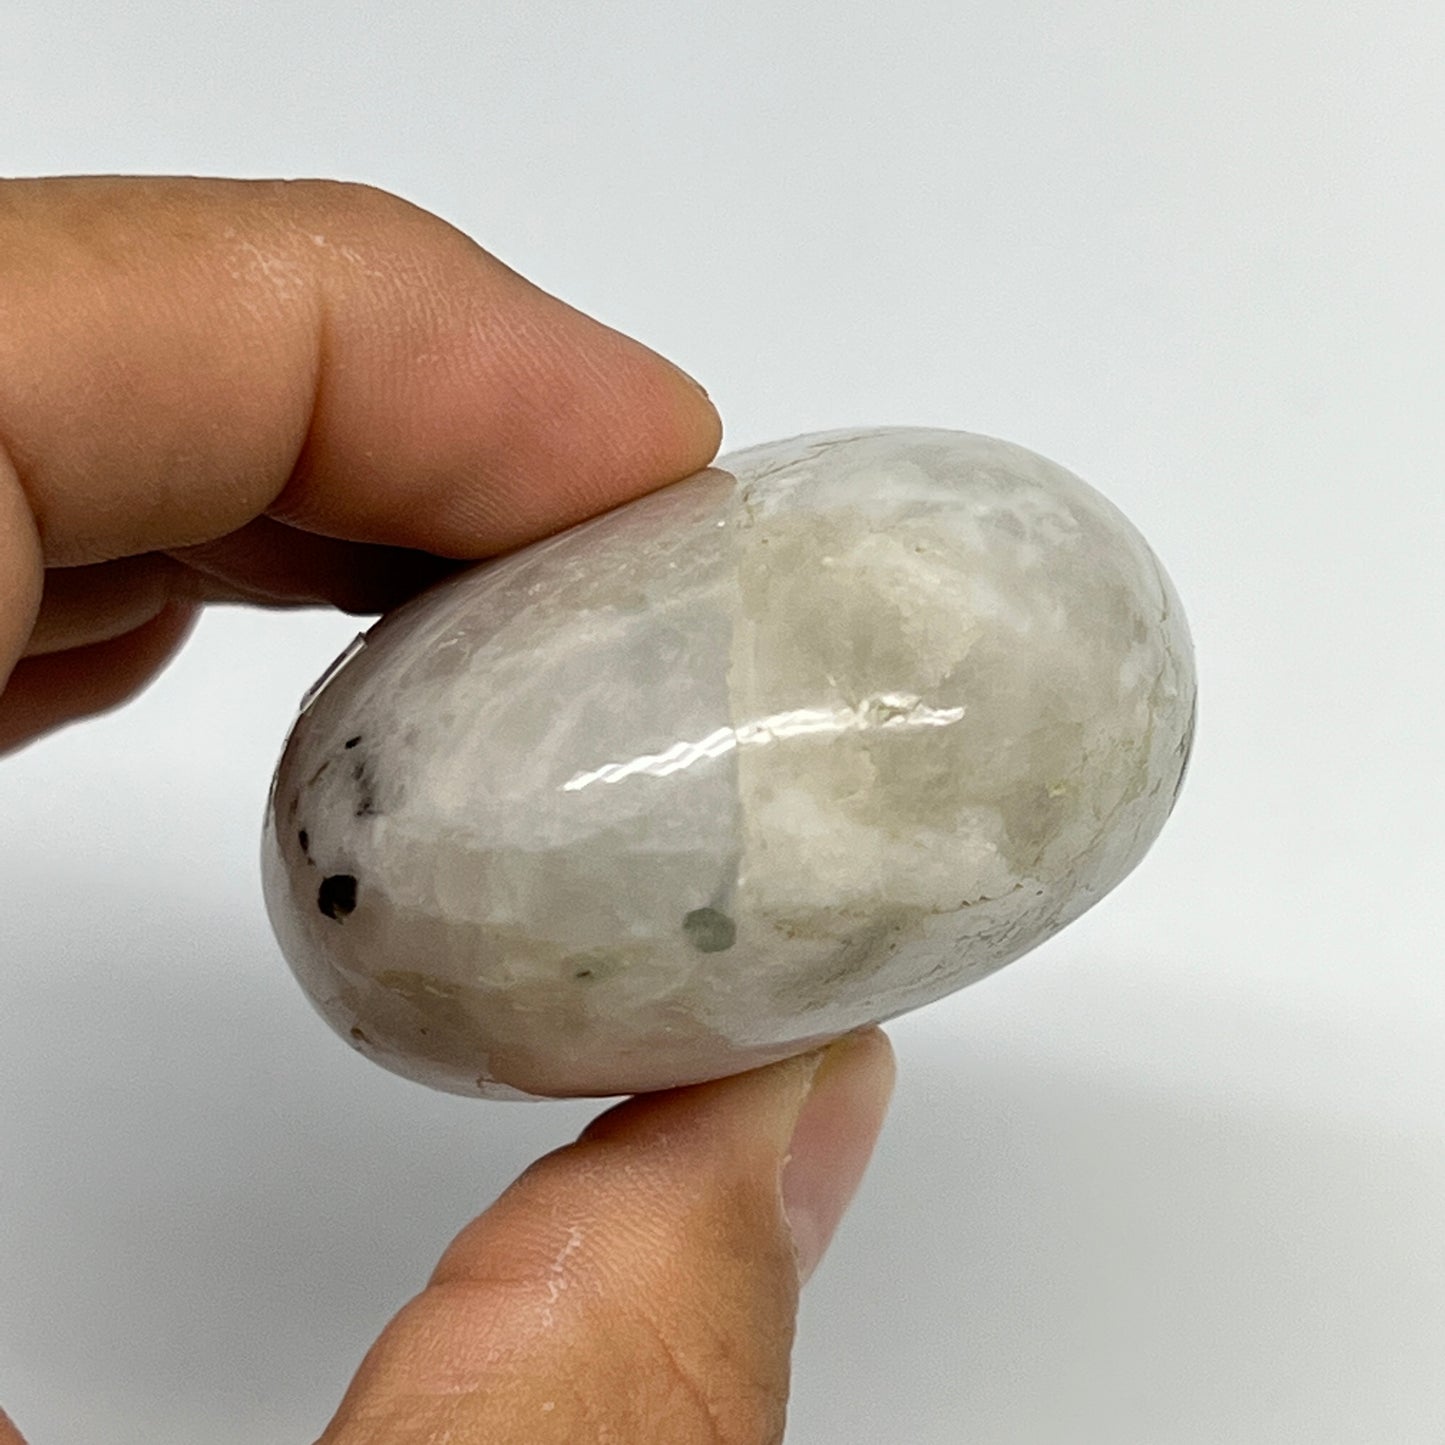 131.4g,2.5"x1.8"x1.1", Rainbow Moonstone Palm-Stone Polished from India, B21290